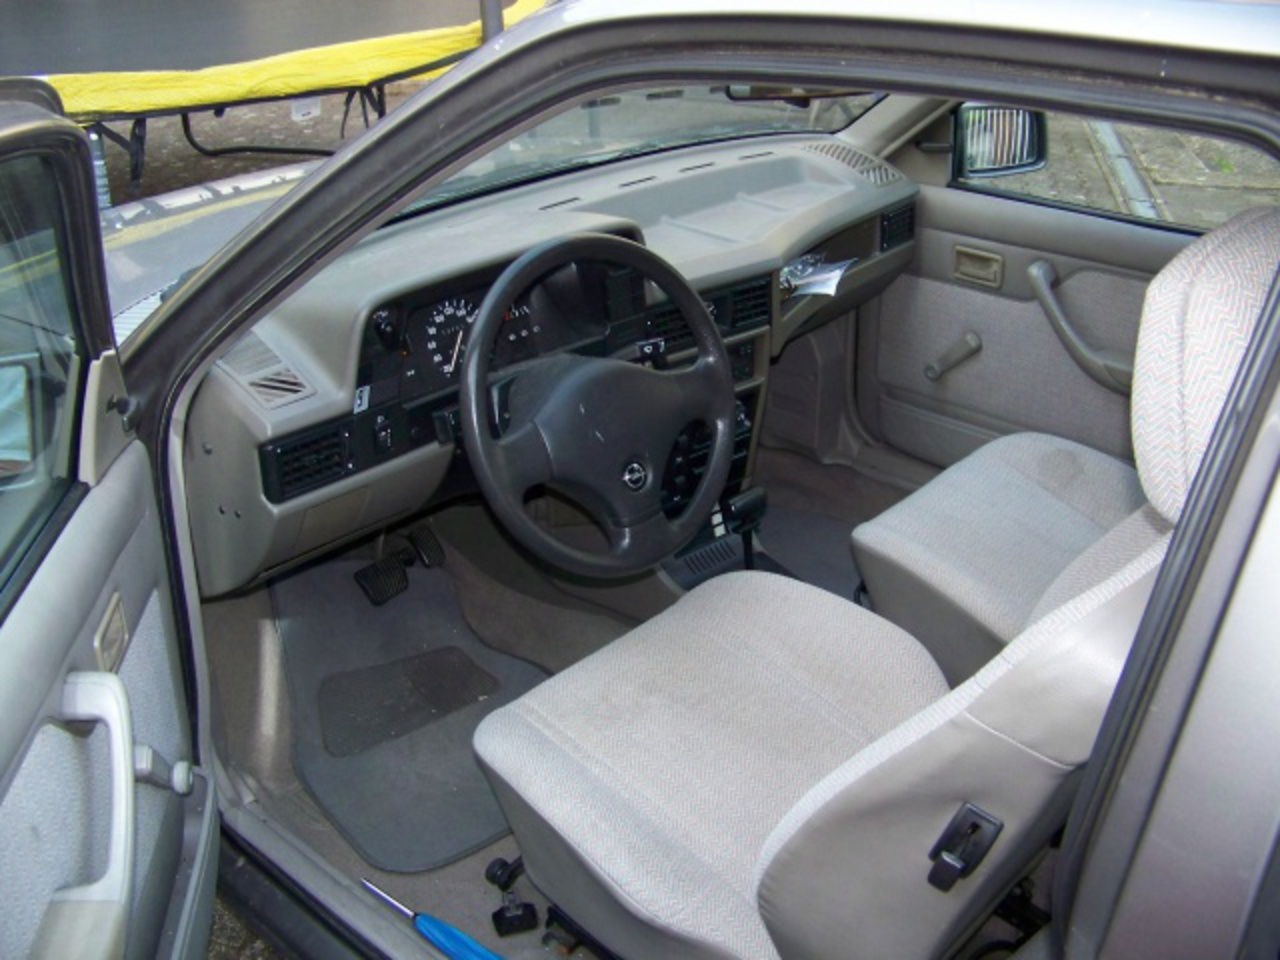 1991 Opel Kadett - Automatic transmission. Needs break-work to pass